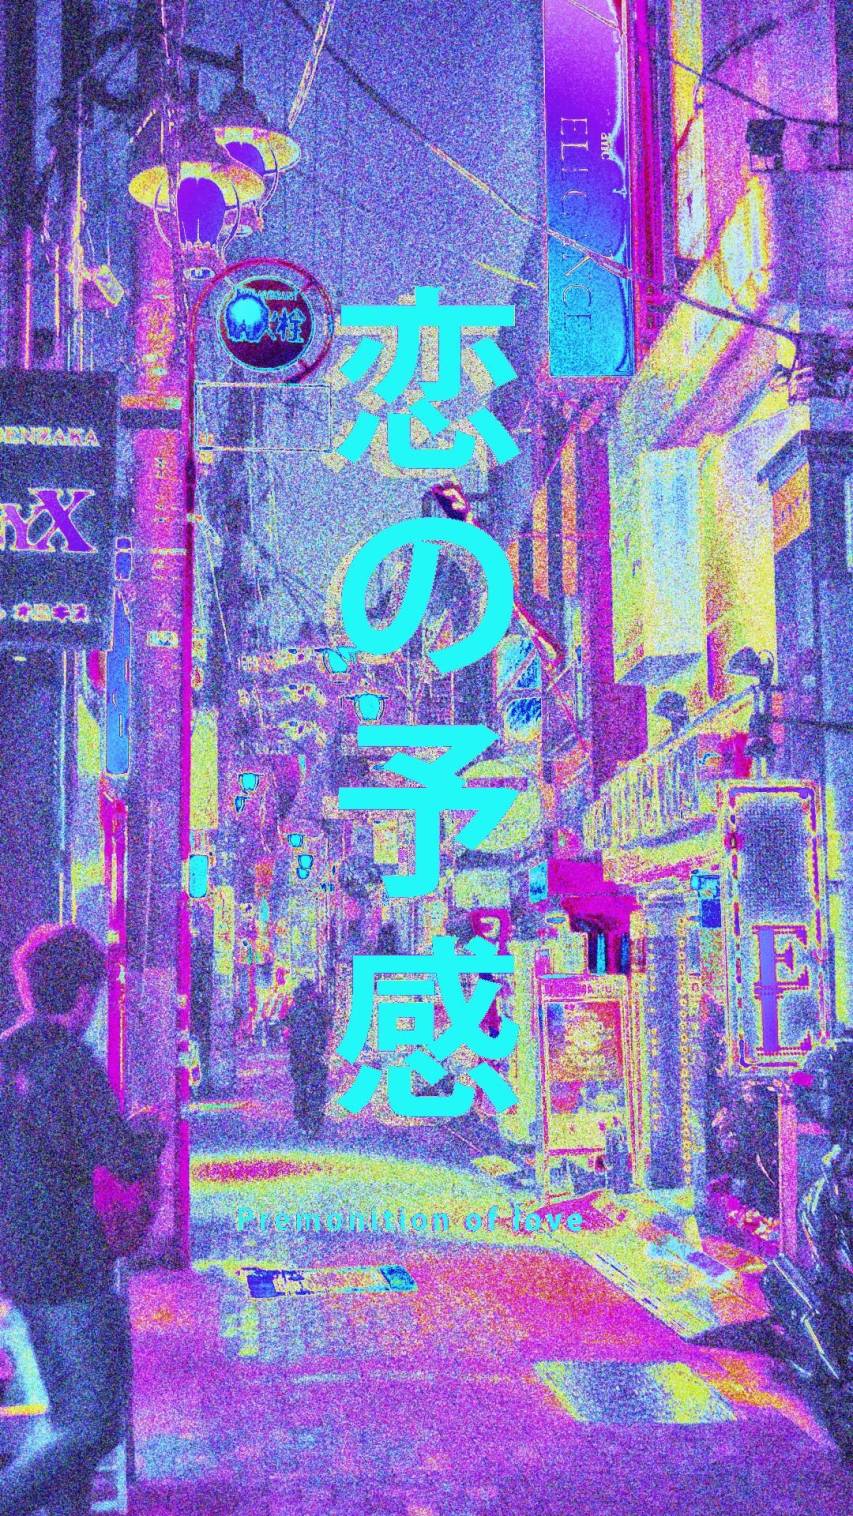 A street scene with people walking down it - Phone, JDM, vaporwave